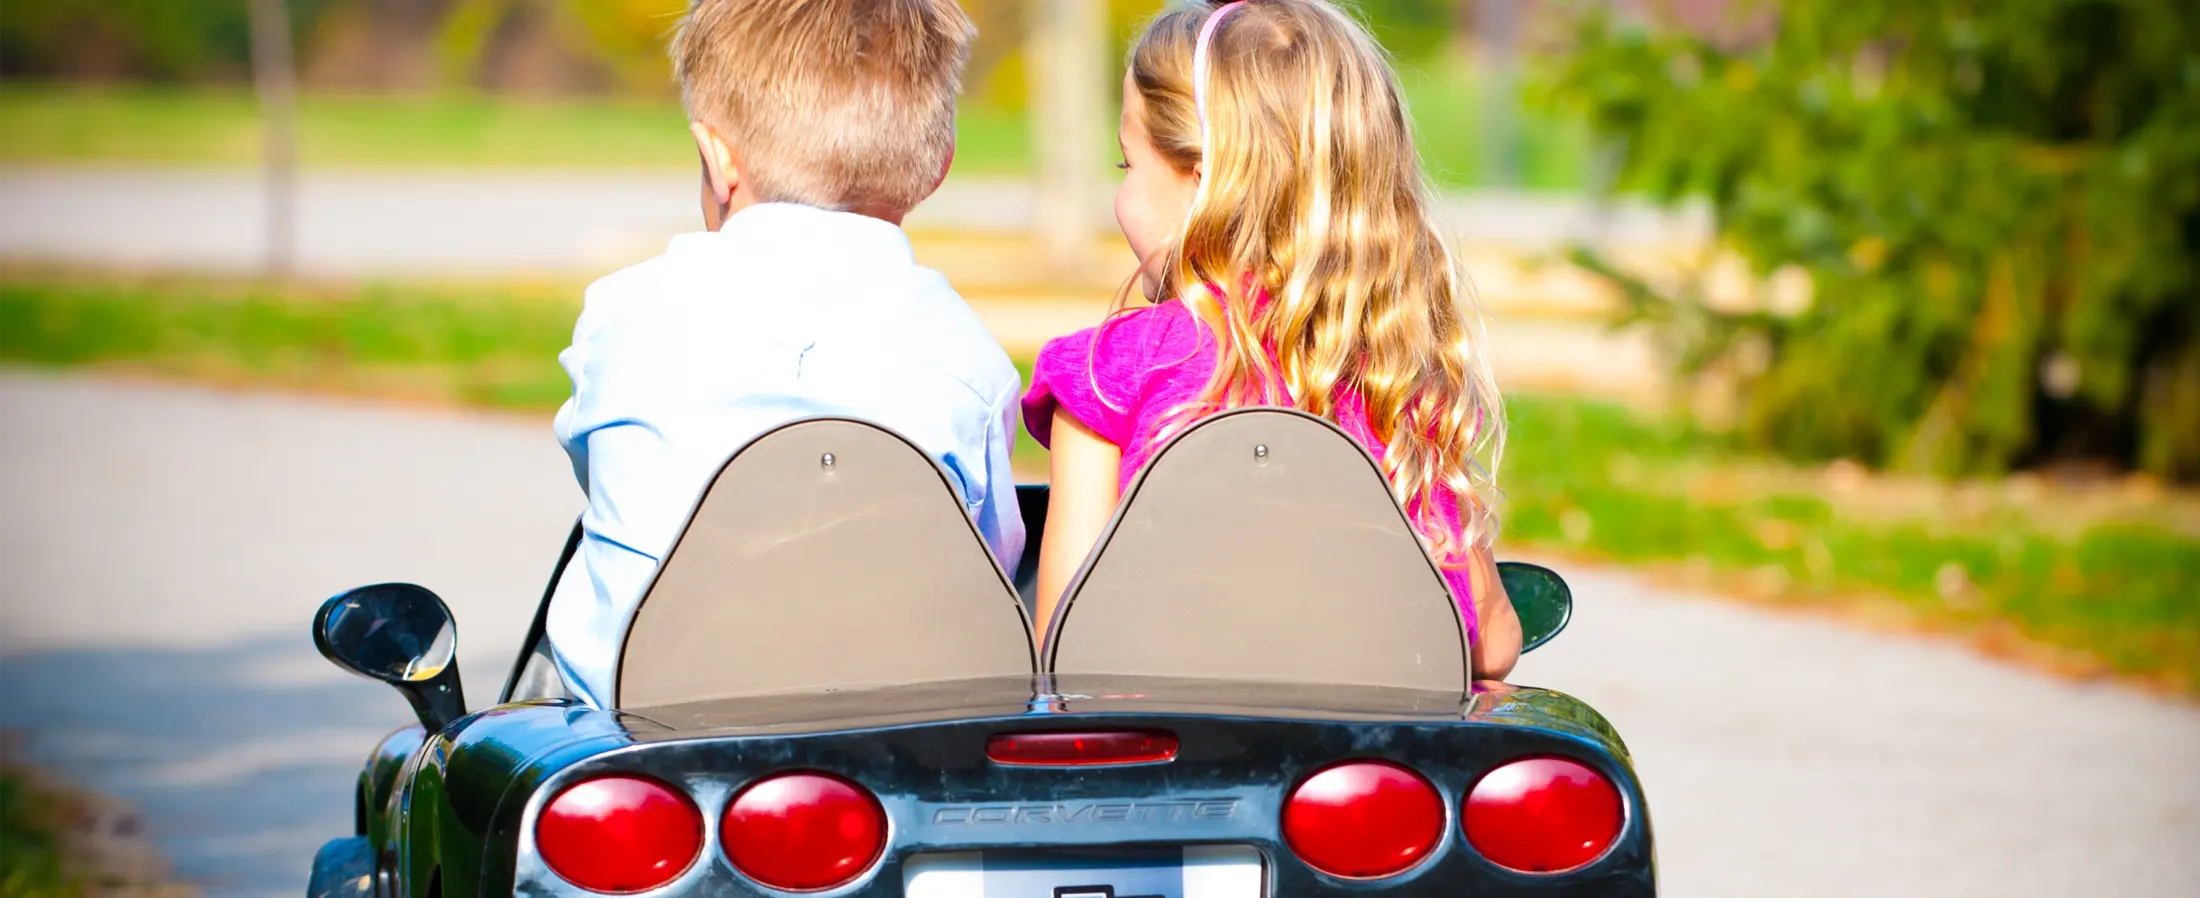 Children driving toy car